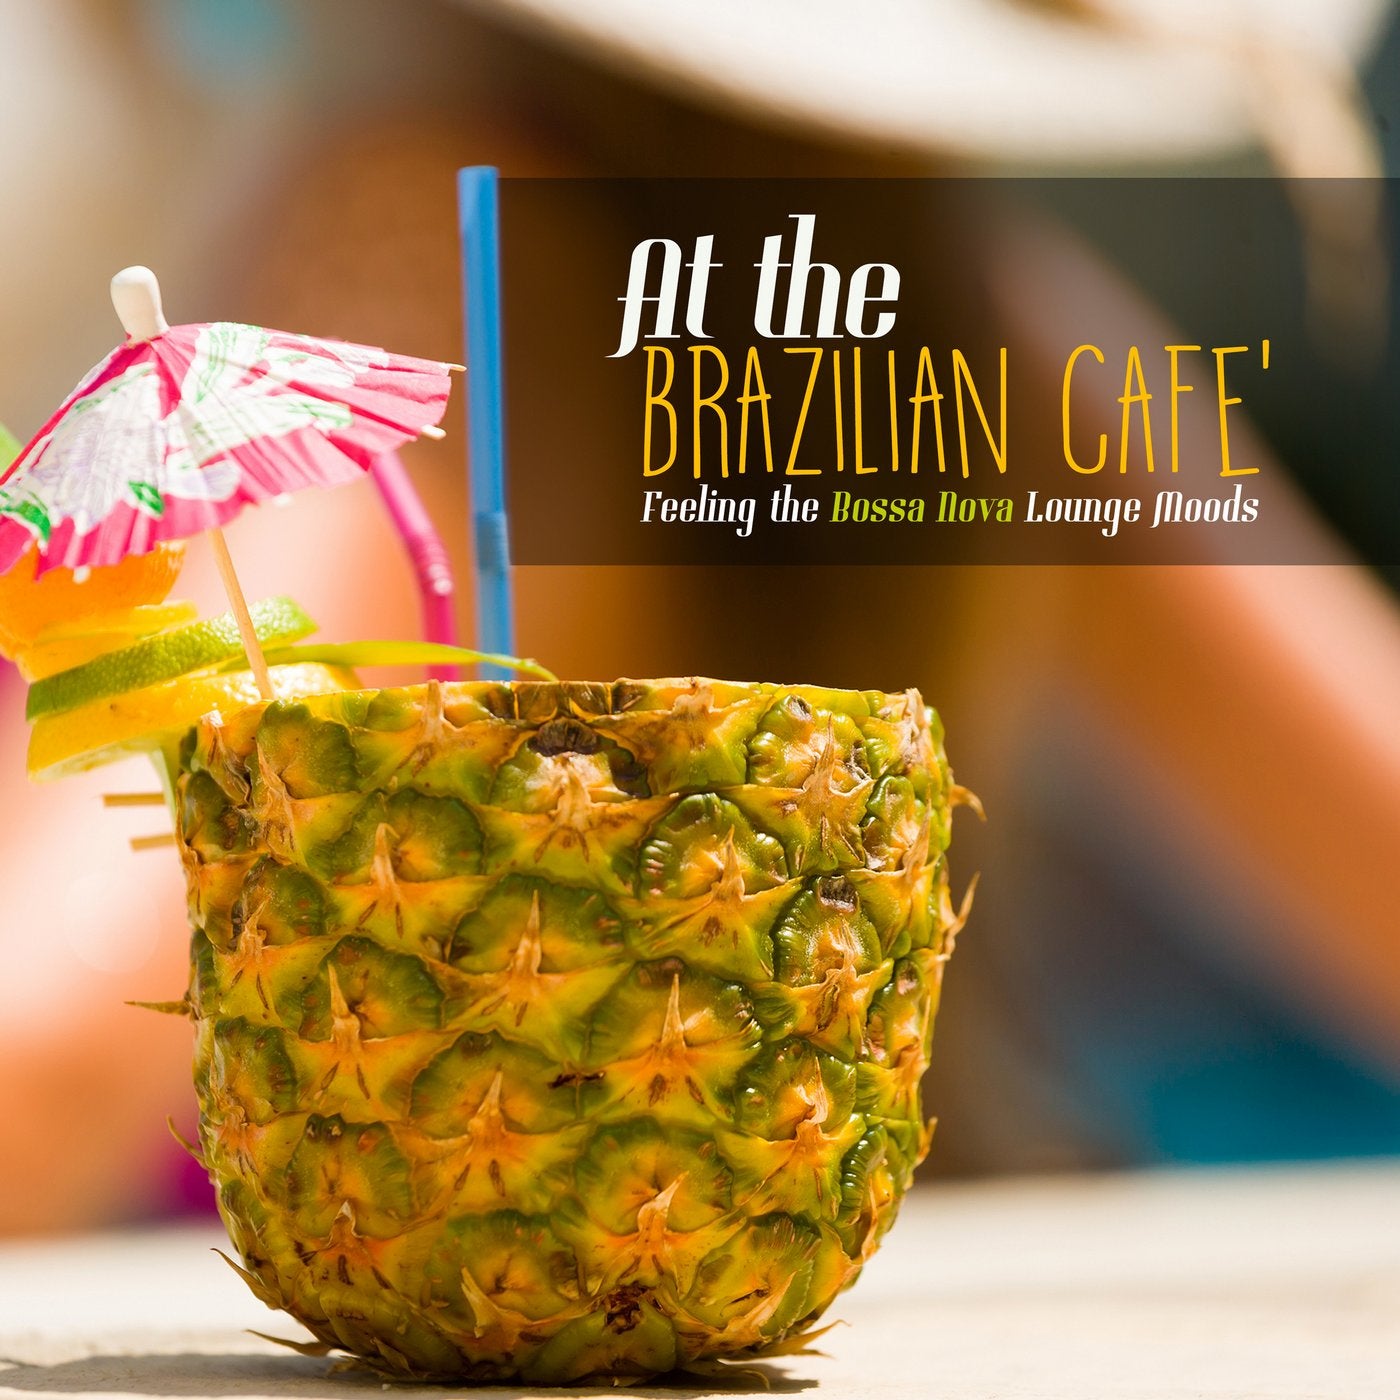 At the Brazilian Cafe': Feeling the Bossa Nova Lounge Moods